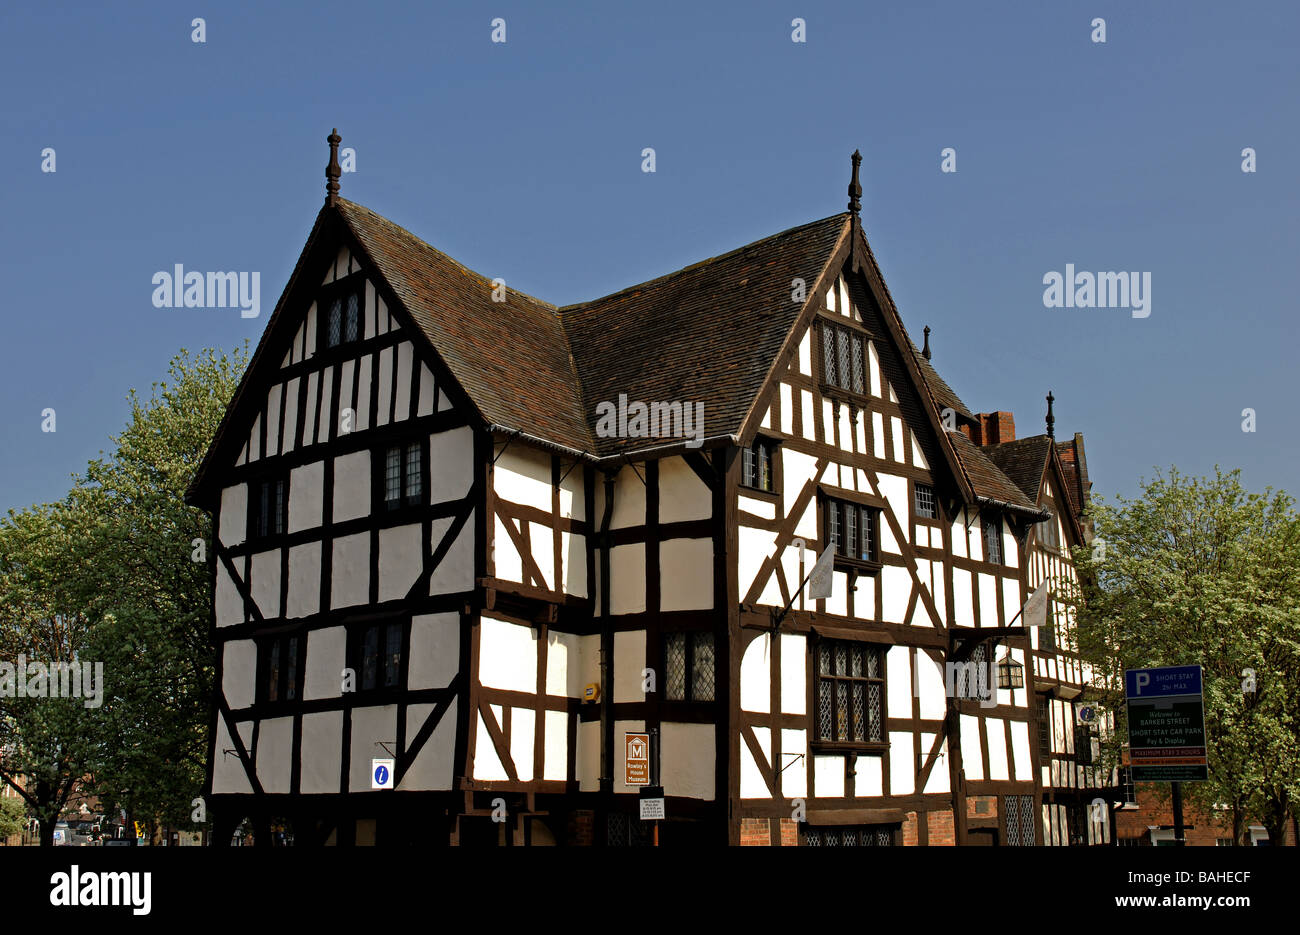 Rowleys House Shrewsbury High Resolution Stock Photography And Images Alamy